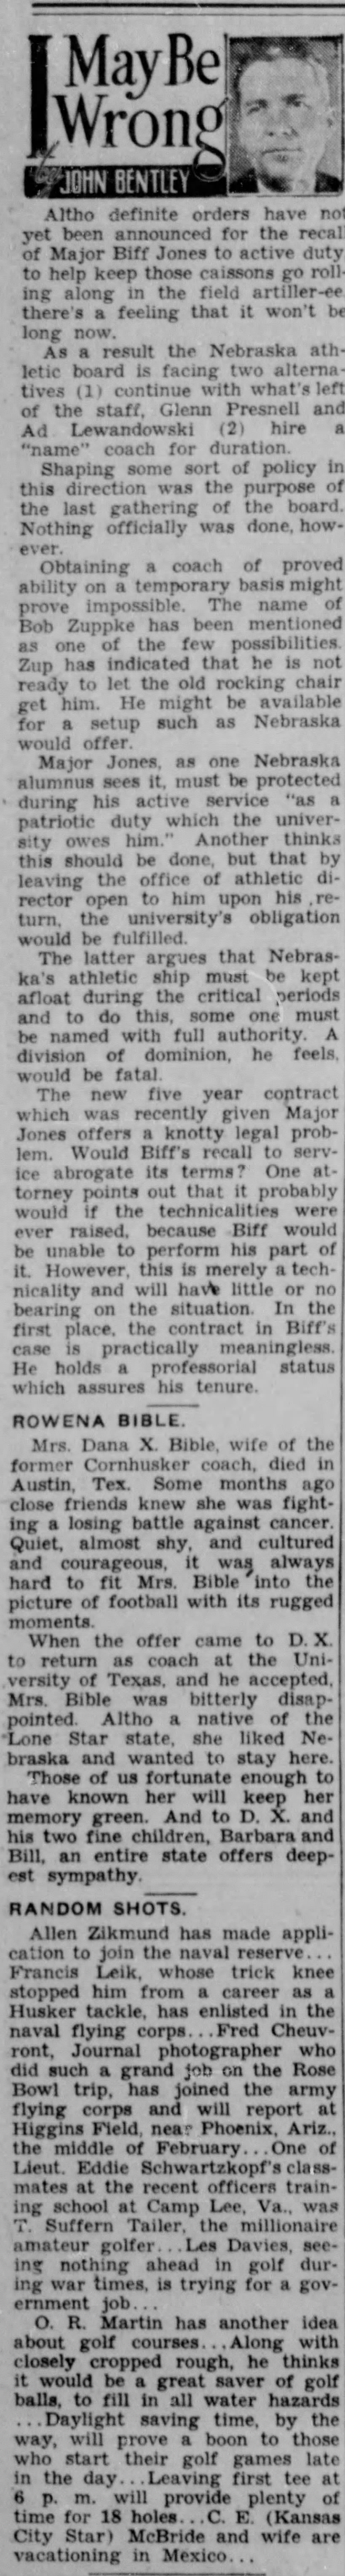 1942 Post-Biff Jones options